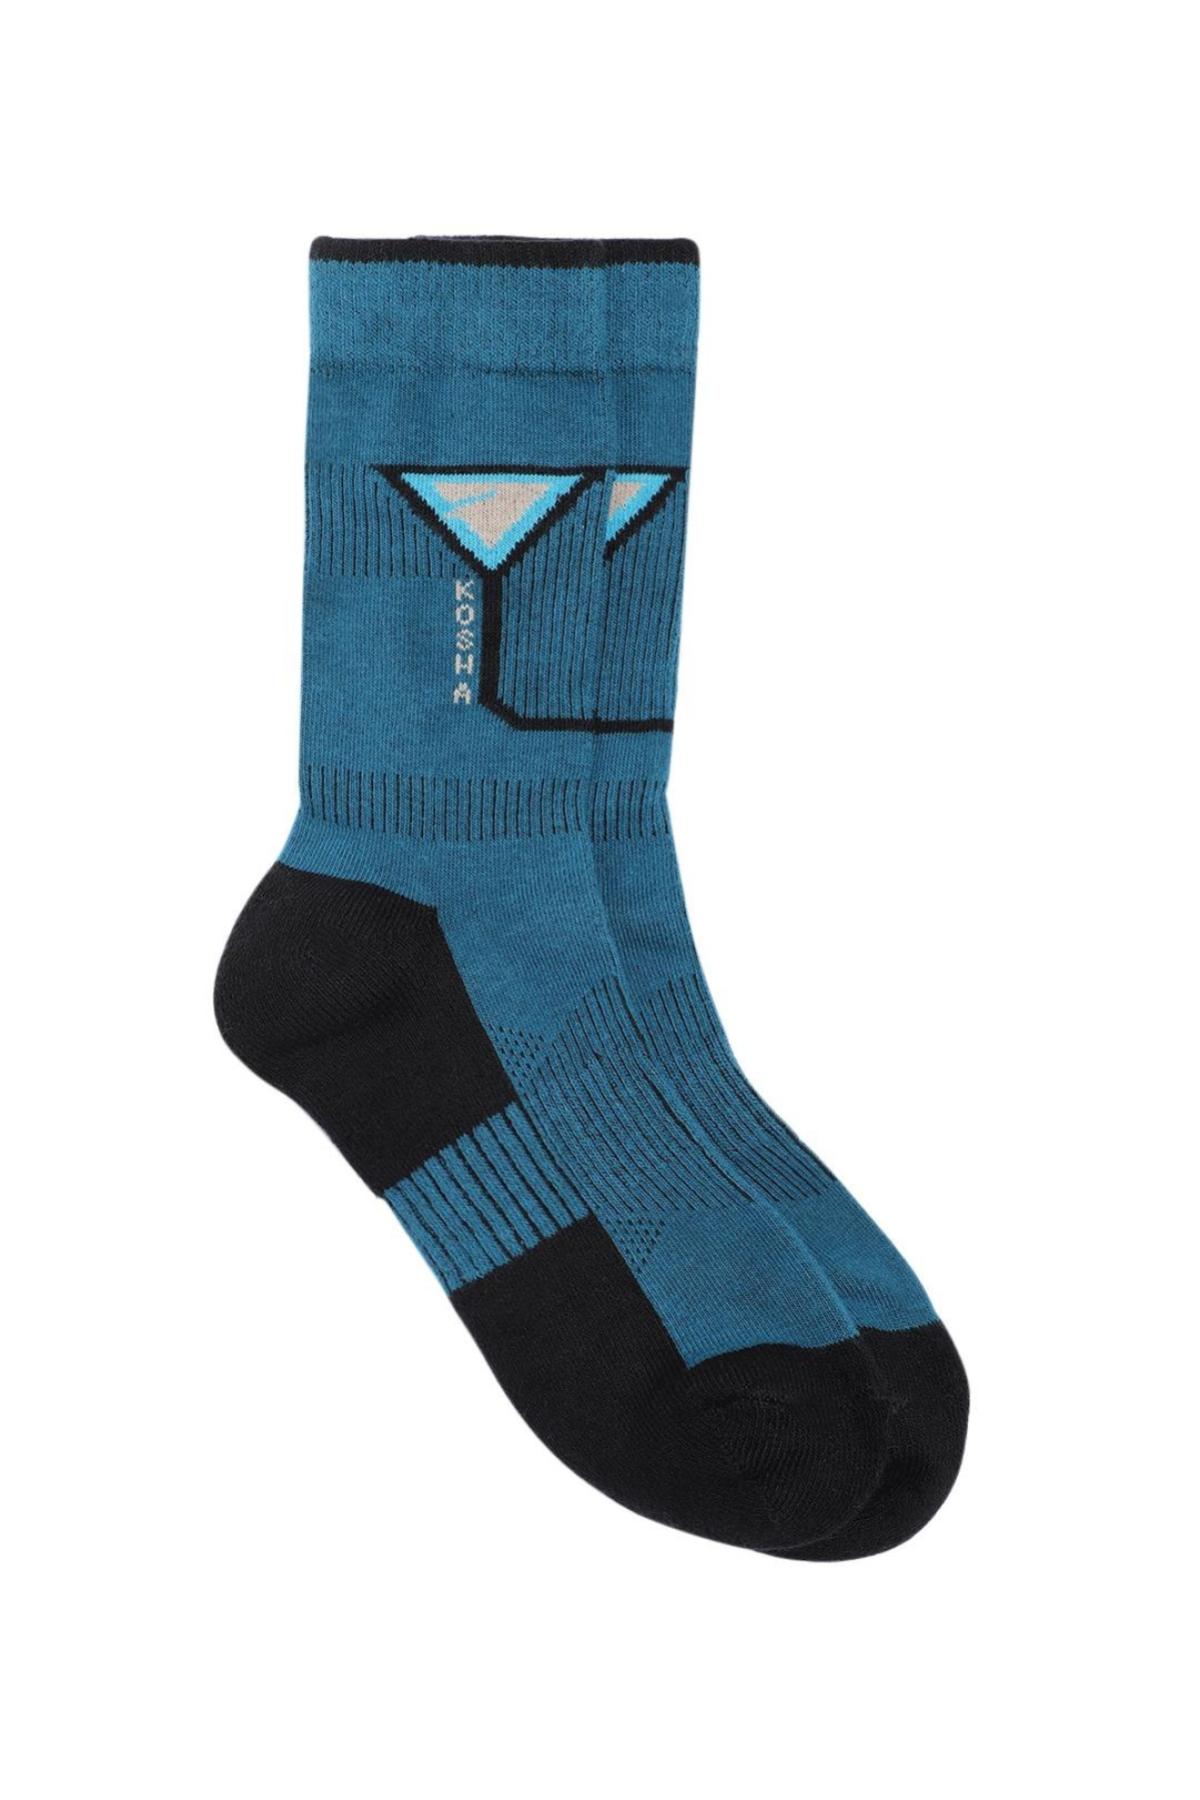 Teal & Black Regular Length Cotton Socks Pack of 2 | Men